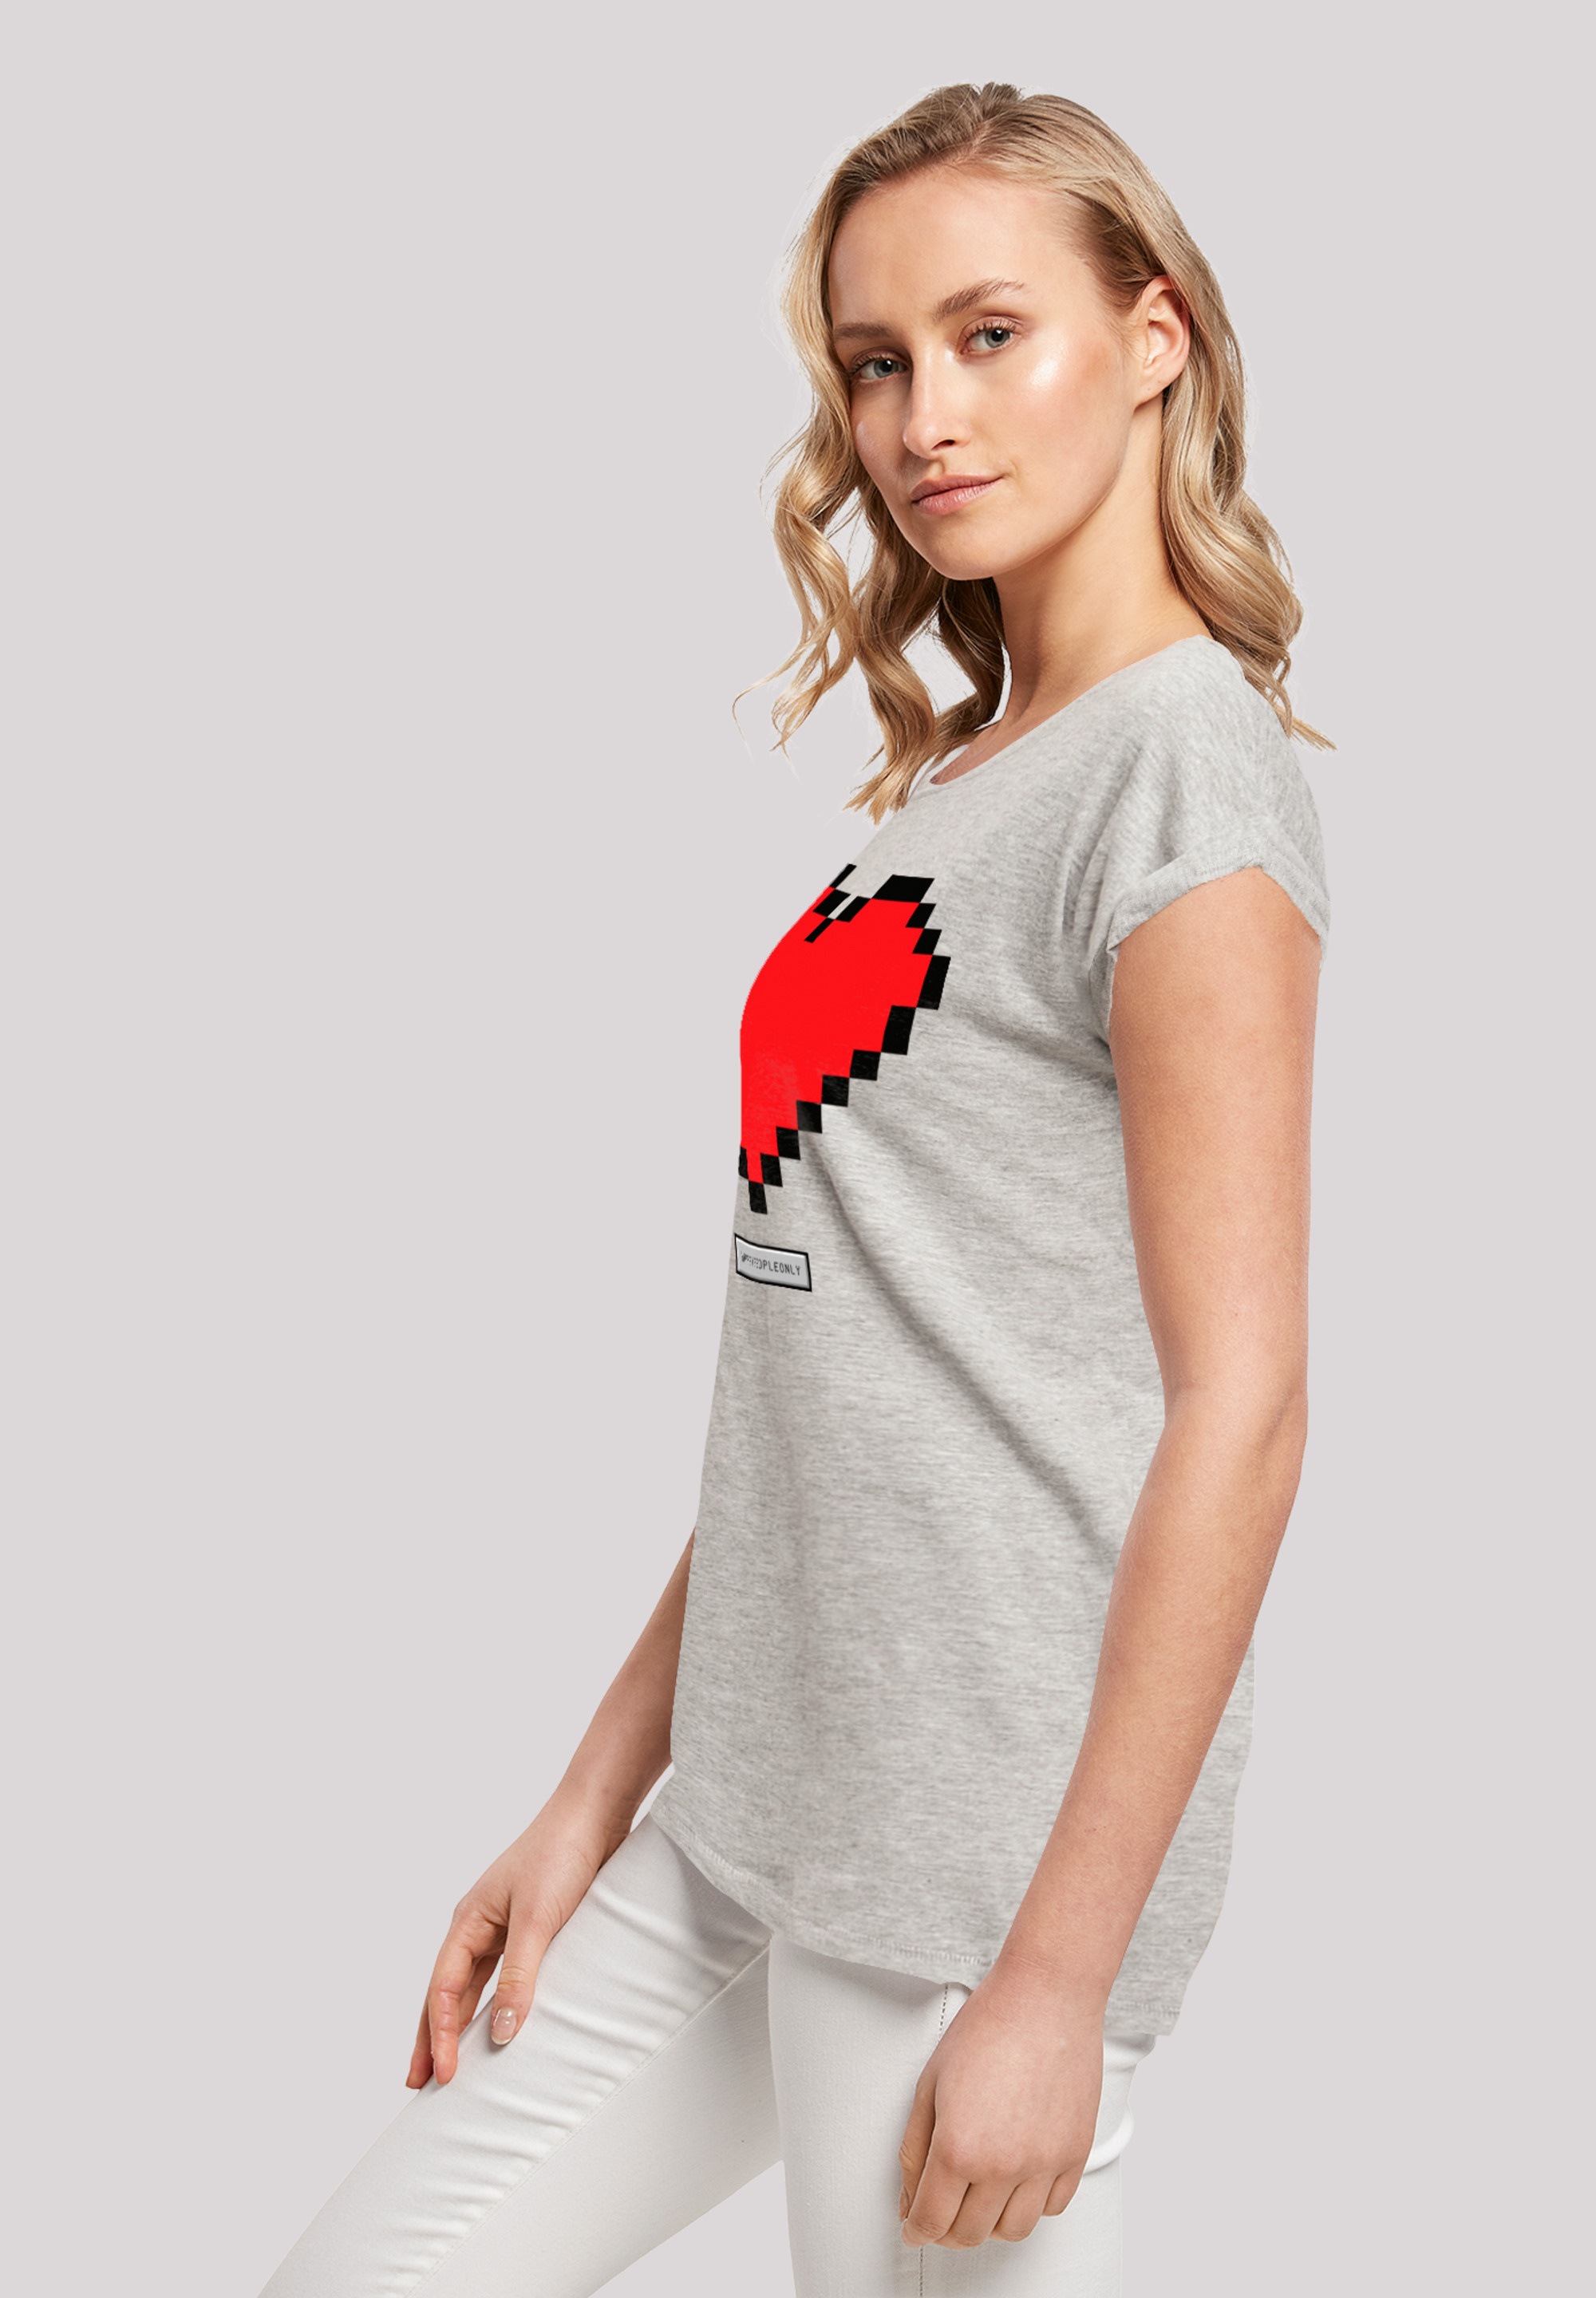 | kaufen Vibes Herz People«, Print »Pixel BAUR Good T-Shirt Happy F4NT4STIC